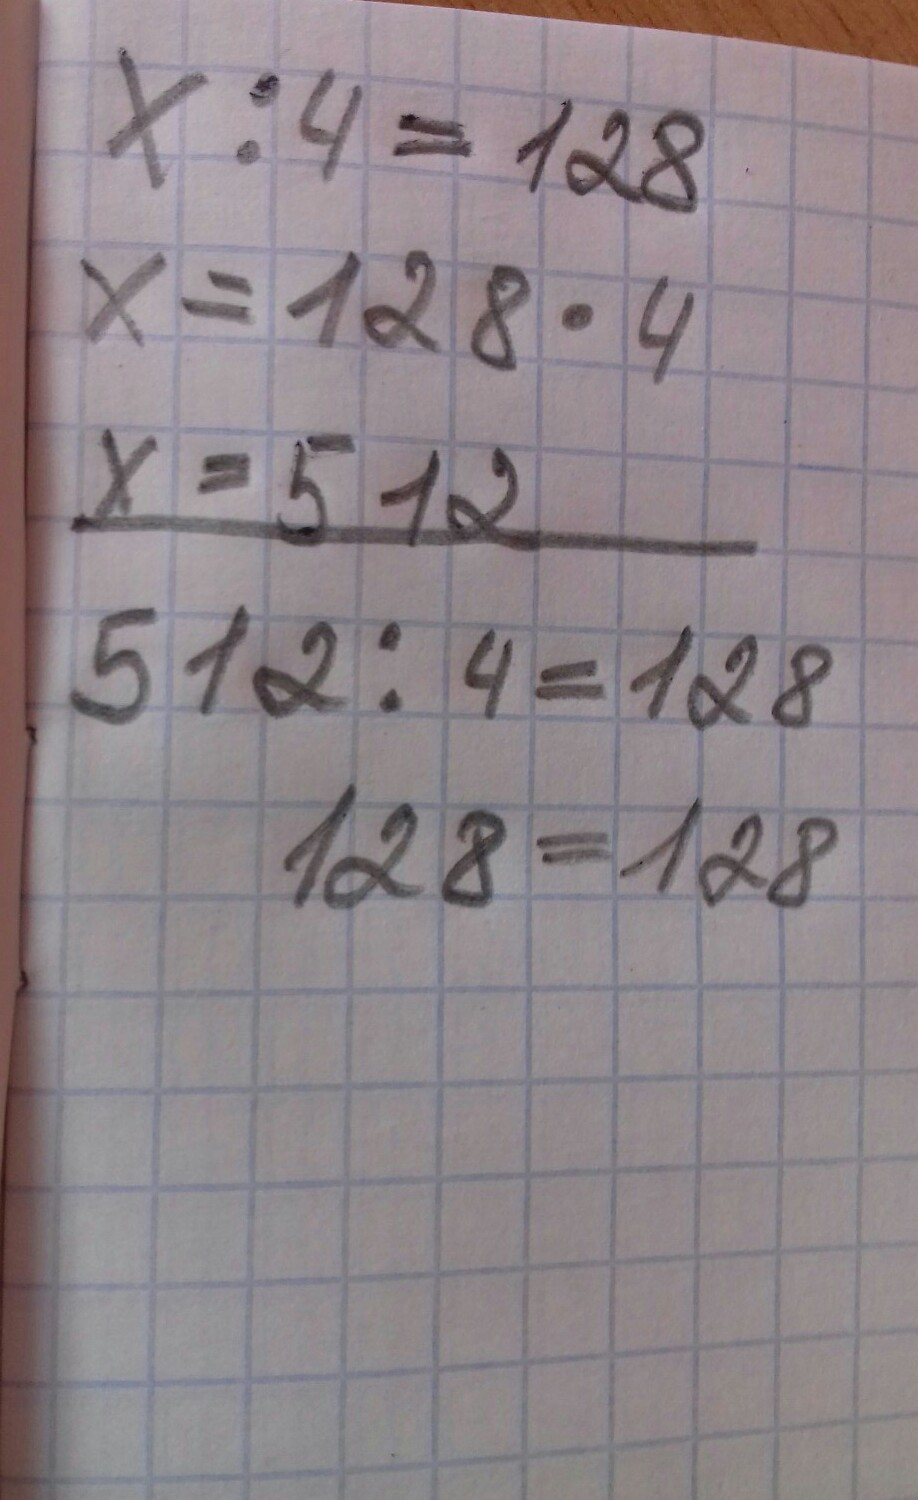 Икс умножить на 10. 81 Разделить на Икс. Реши уравнение Икс разделить на 3 равно 27. Икс разделить на 4. Уравнение Икс разделить на 8 равно 3.